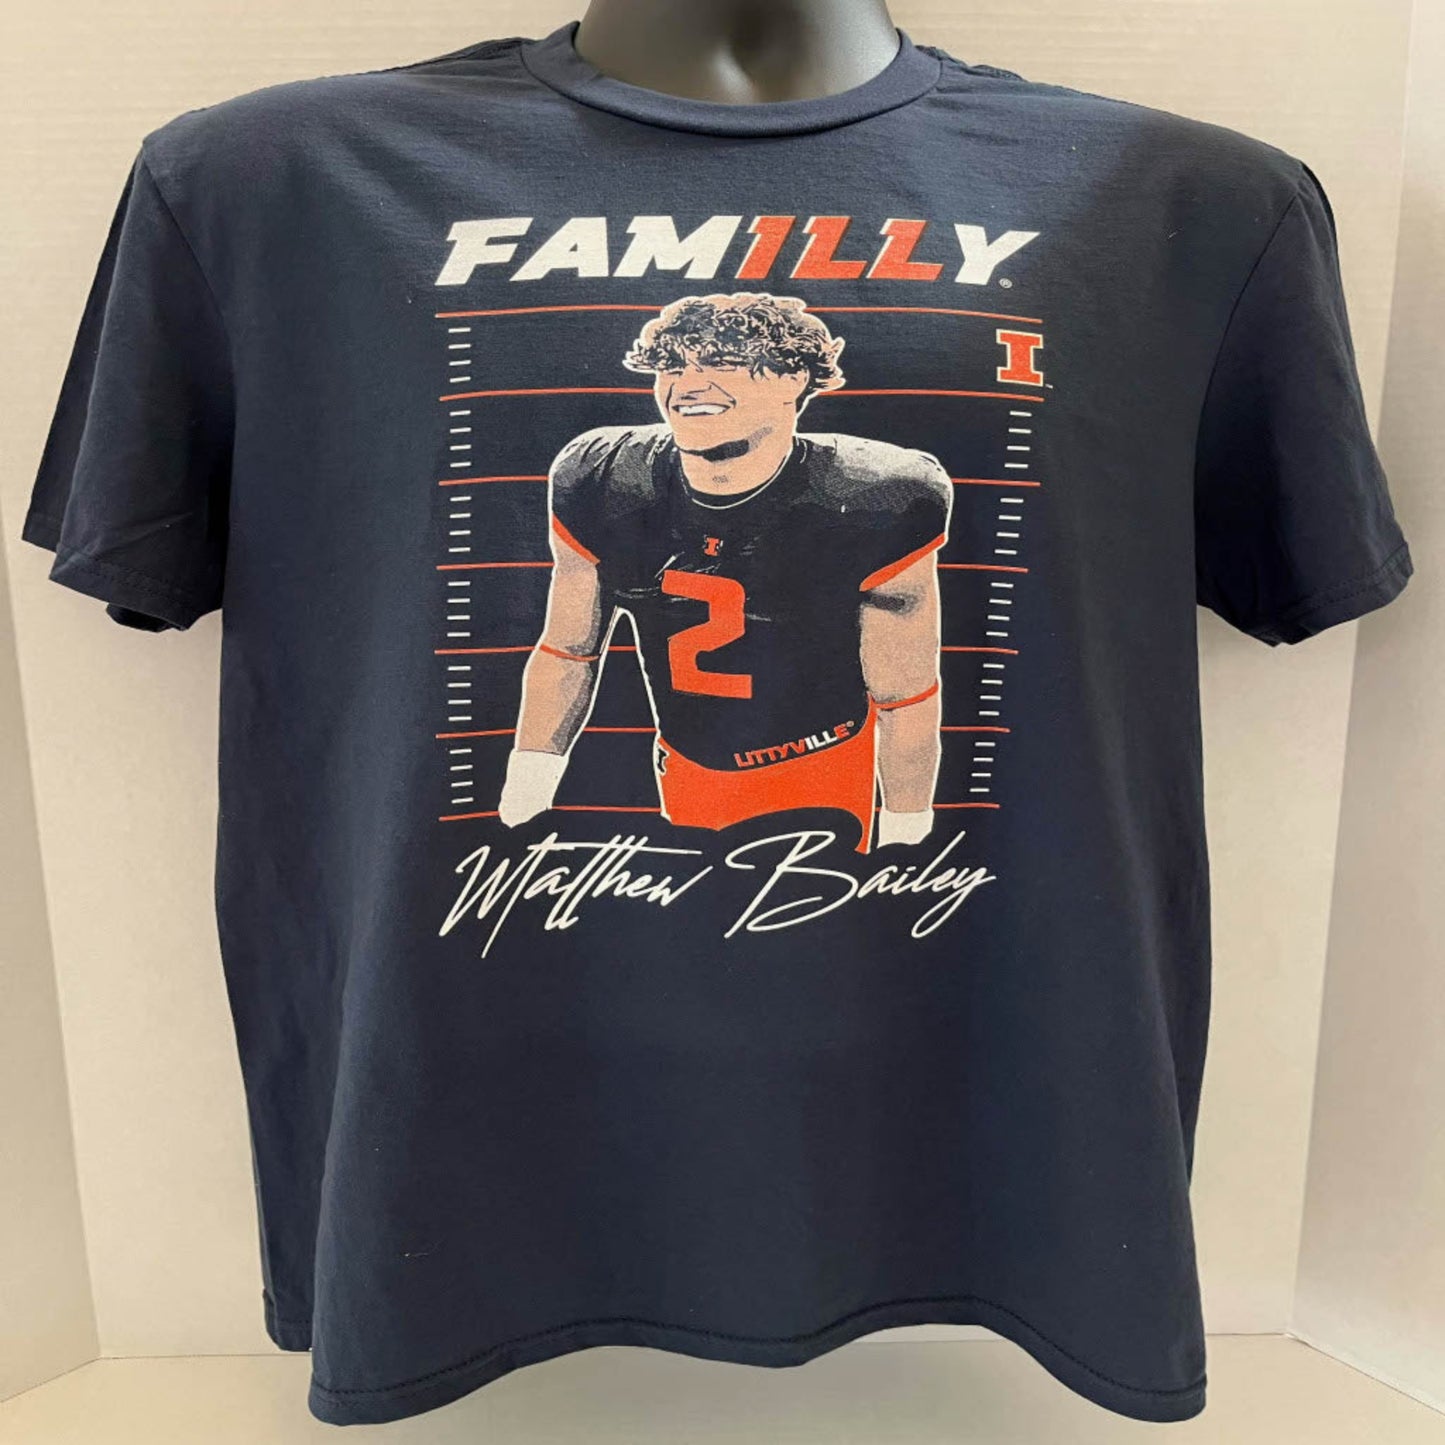 Matthew Bailey FamILLy T-Shirt-Navy